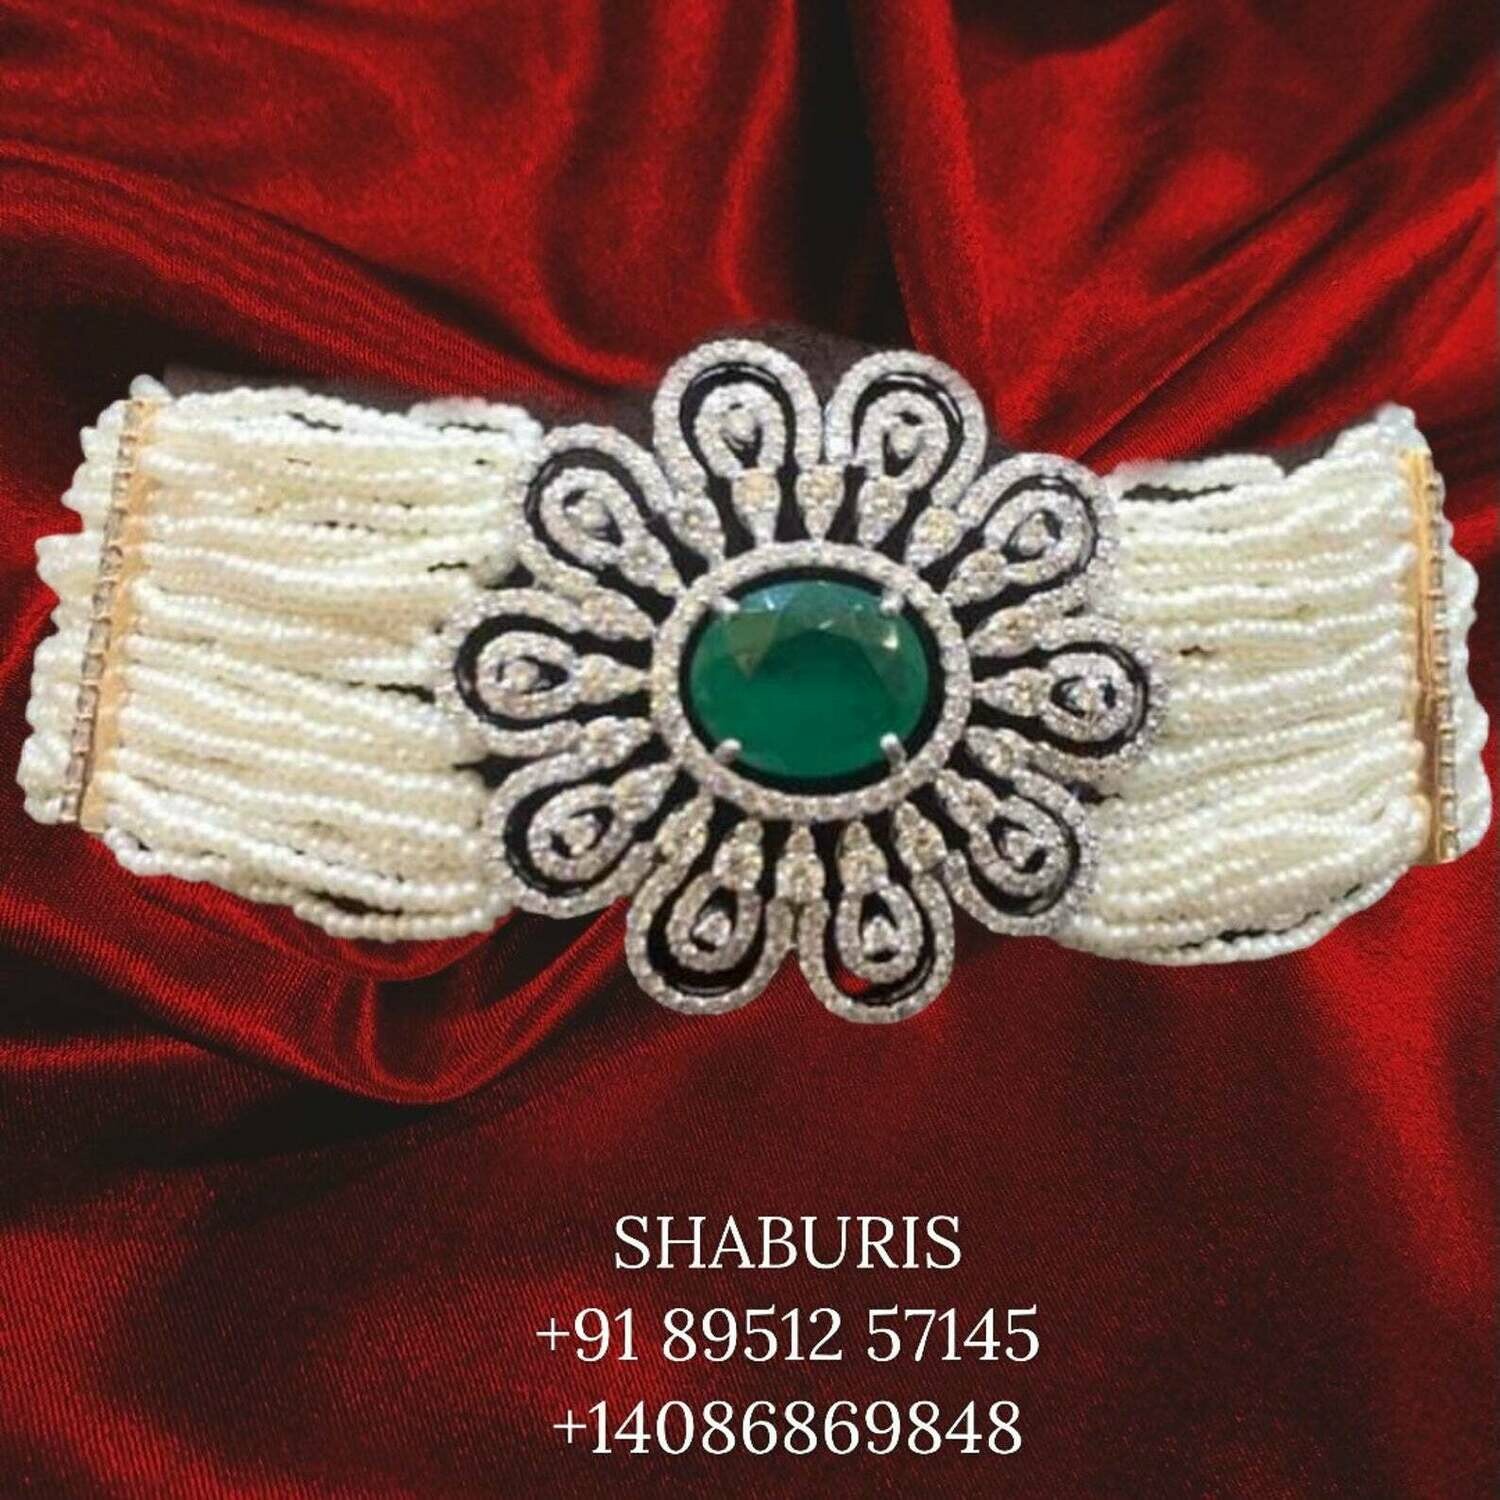 Latest Indian Jewelry,Pure Silver Jewellery Indian ,Lyte Weight Jewelry,Kundan Choker,Indian Bridal,Indian Wedding Jewelry-NIHIRA-SHABURIS